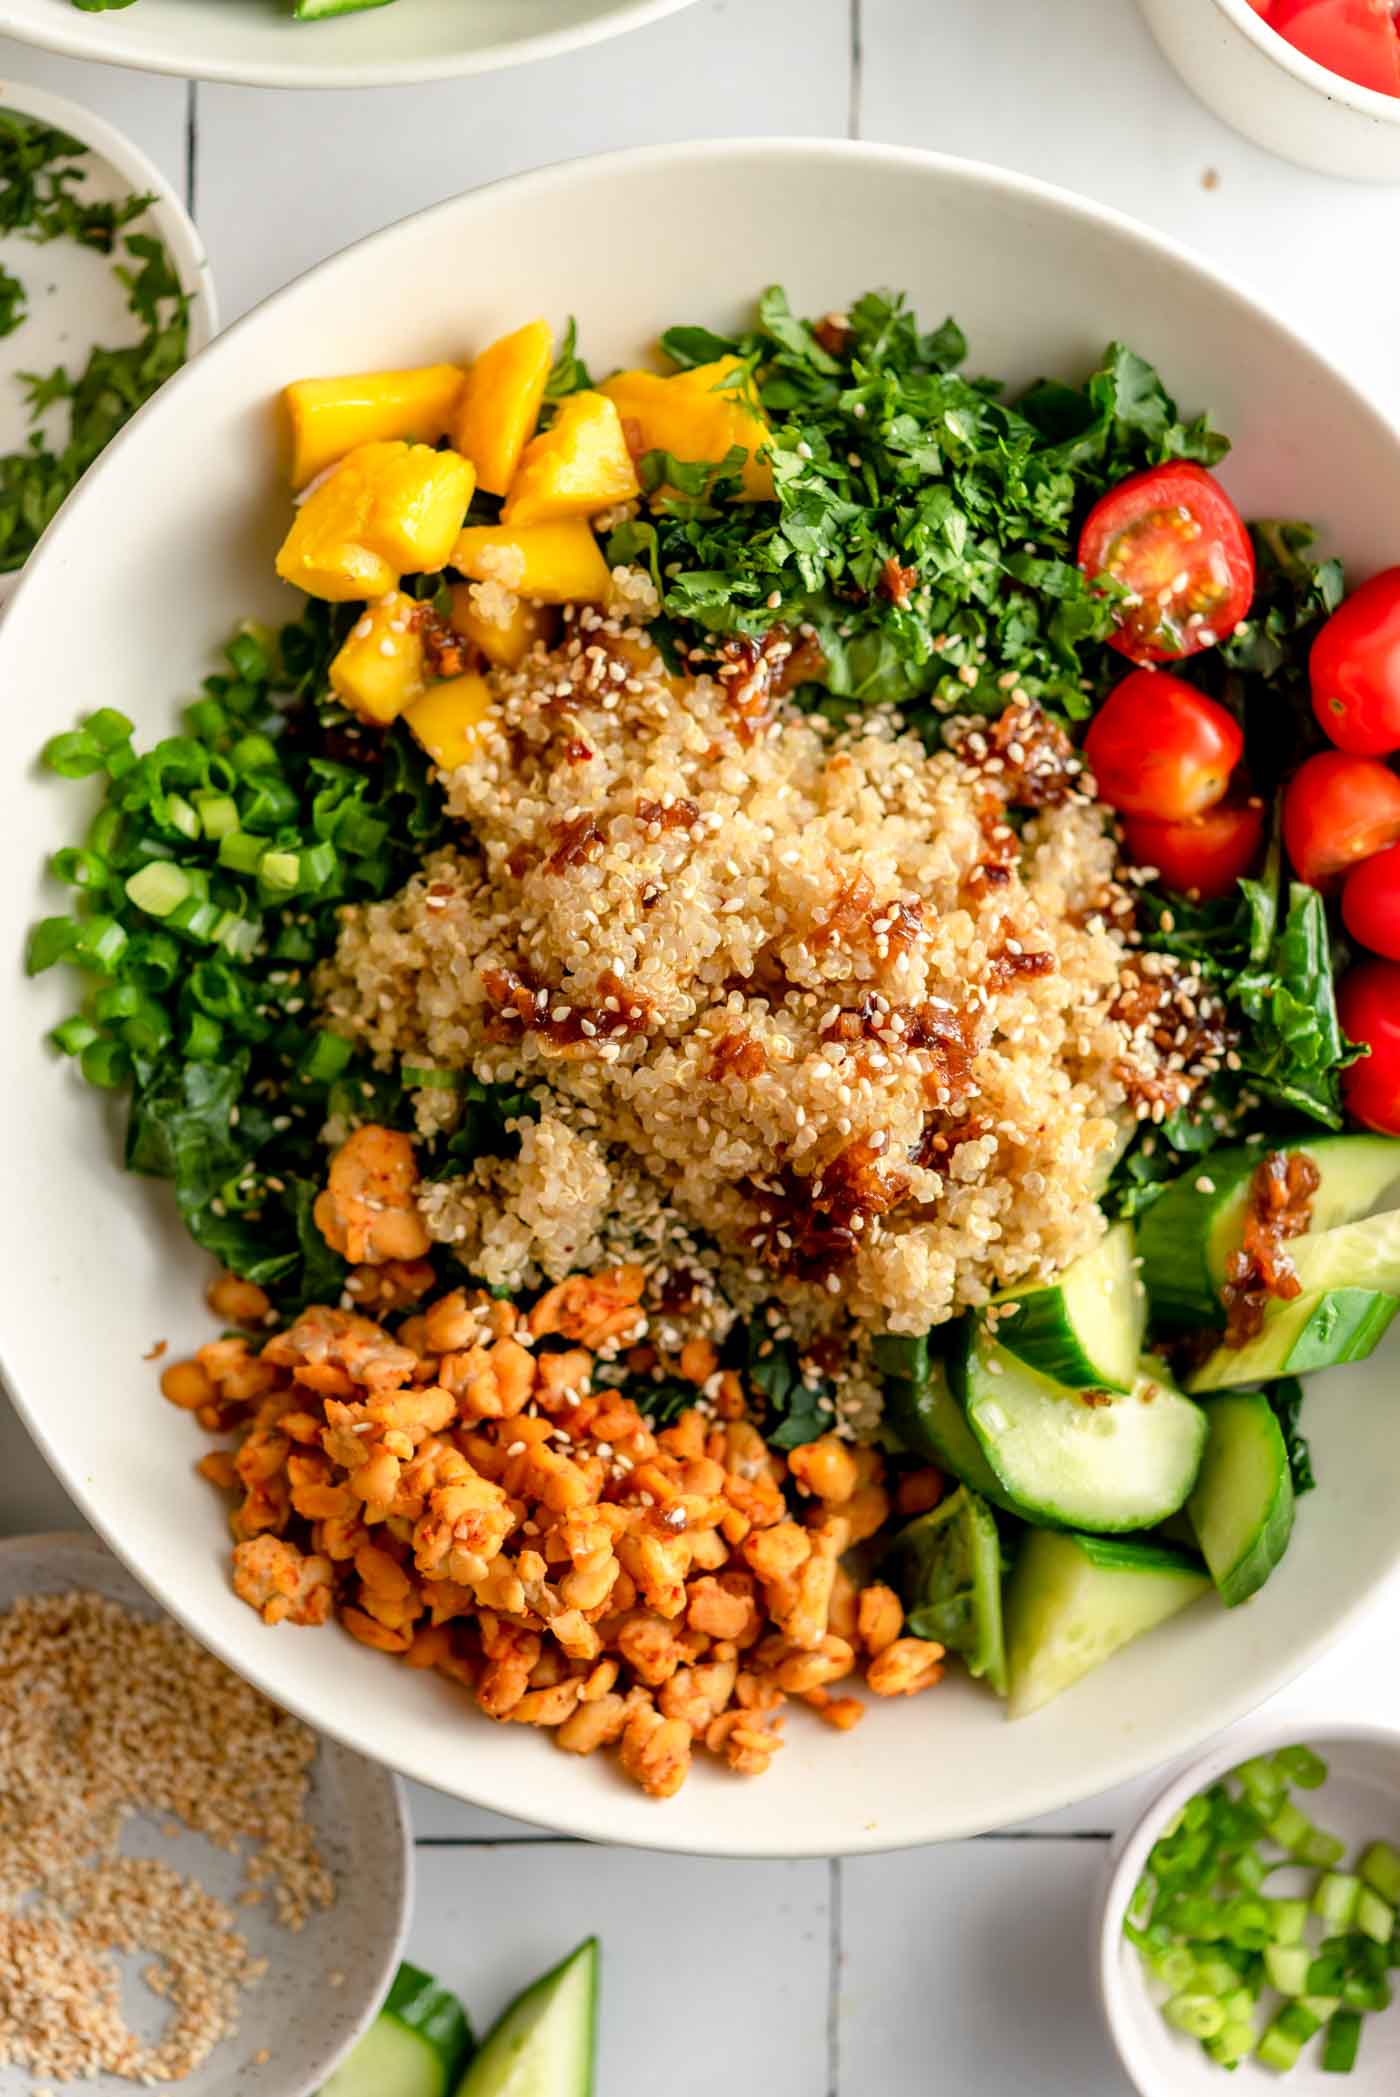 https://runningonrealfood.com/wp-content/uploads/2022/07/vegan-healthy-grain-bowl-with-kale-tempeh-quinoa-recipe.jpg